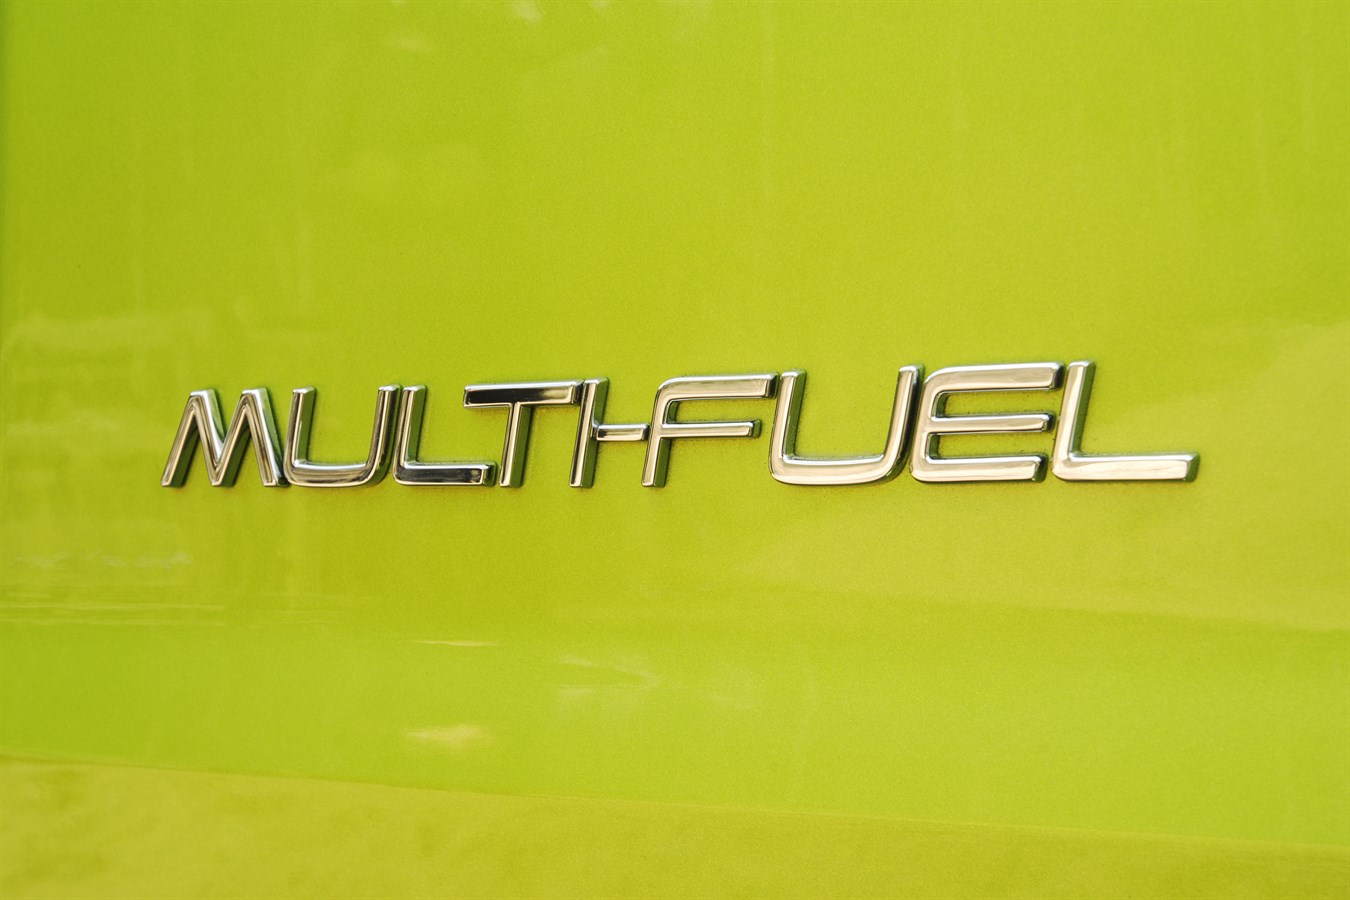 Volvo Multi-Fuel